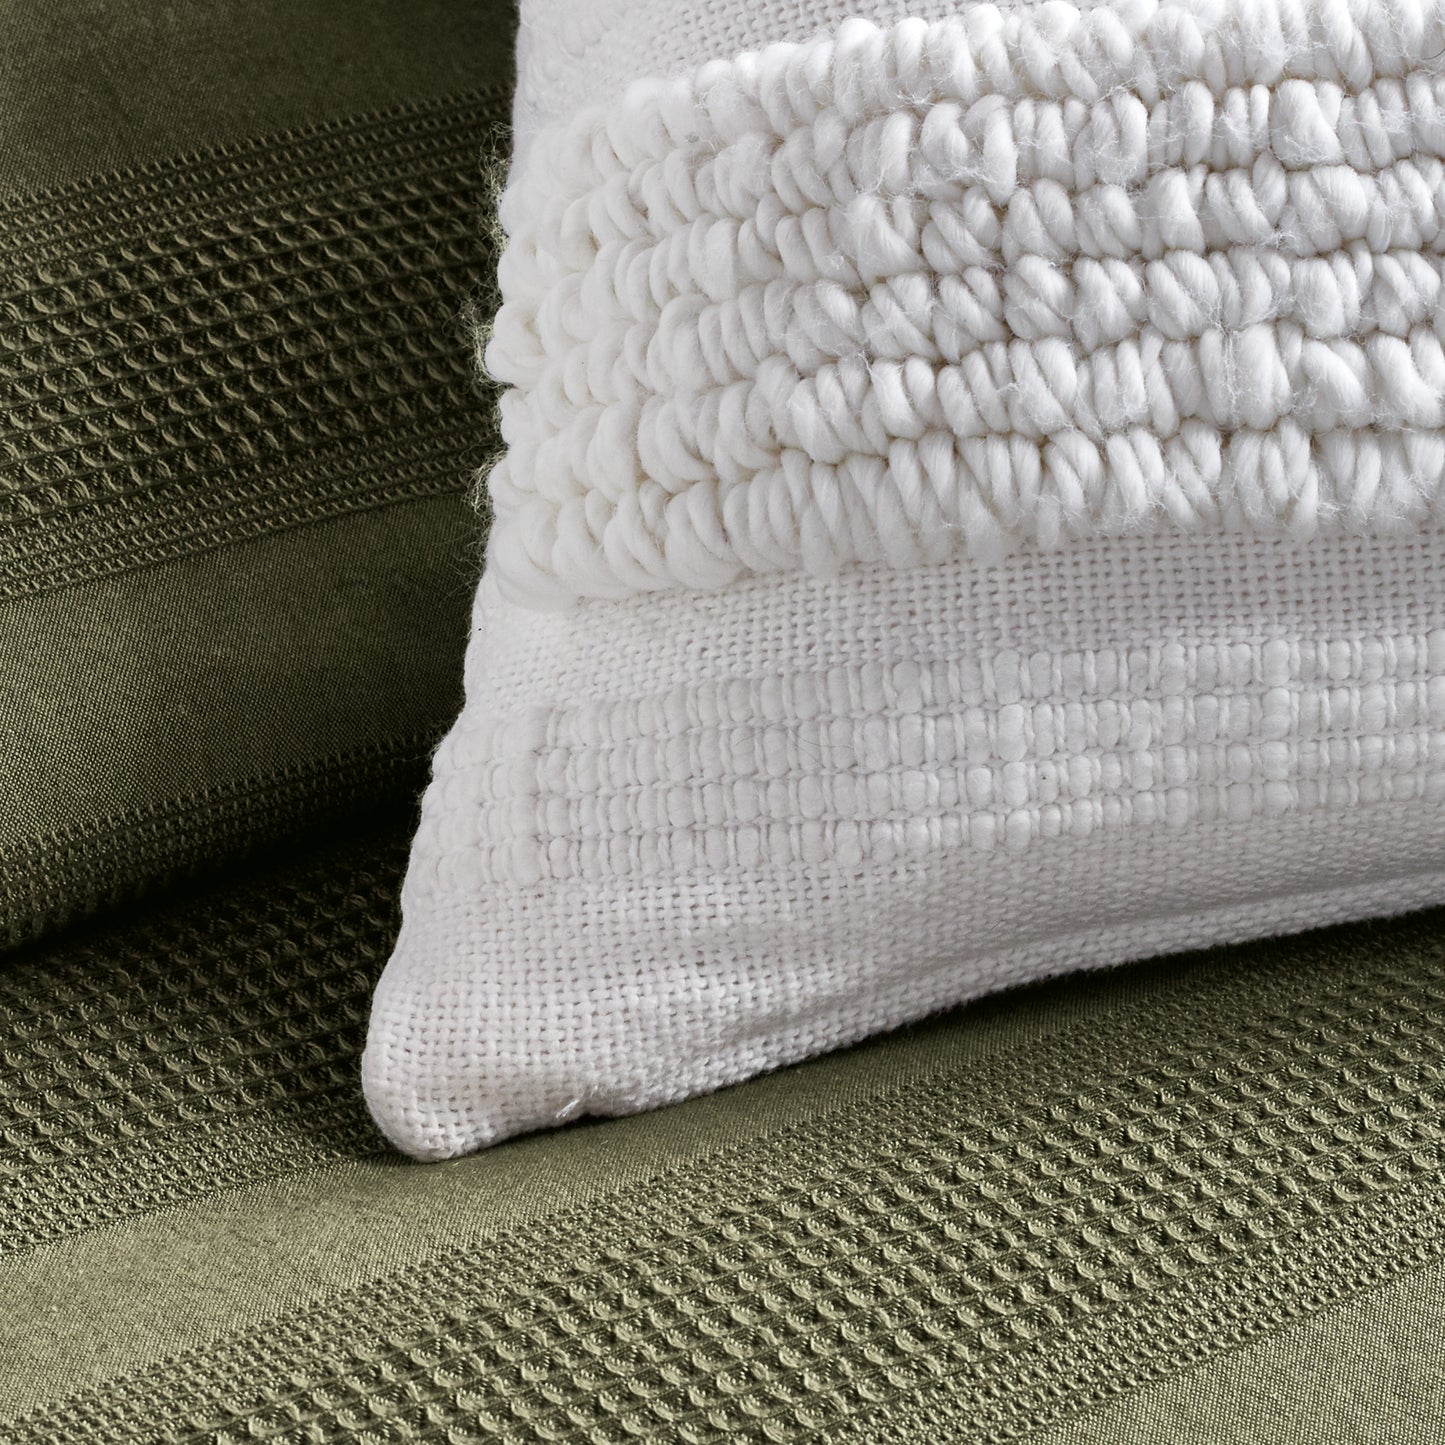 DKNY Textured Stripe Decorative Pillow